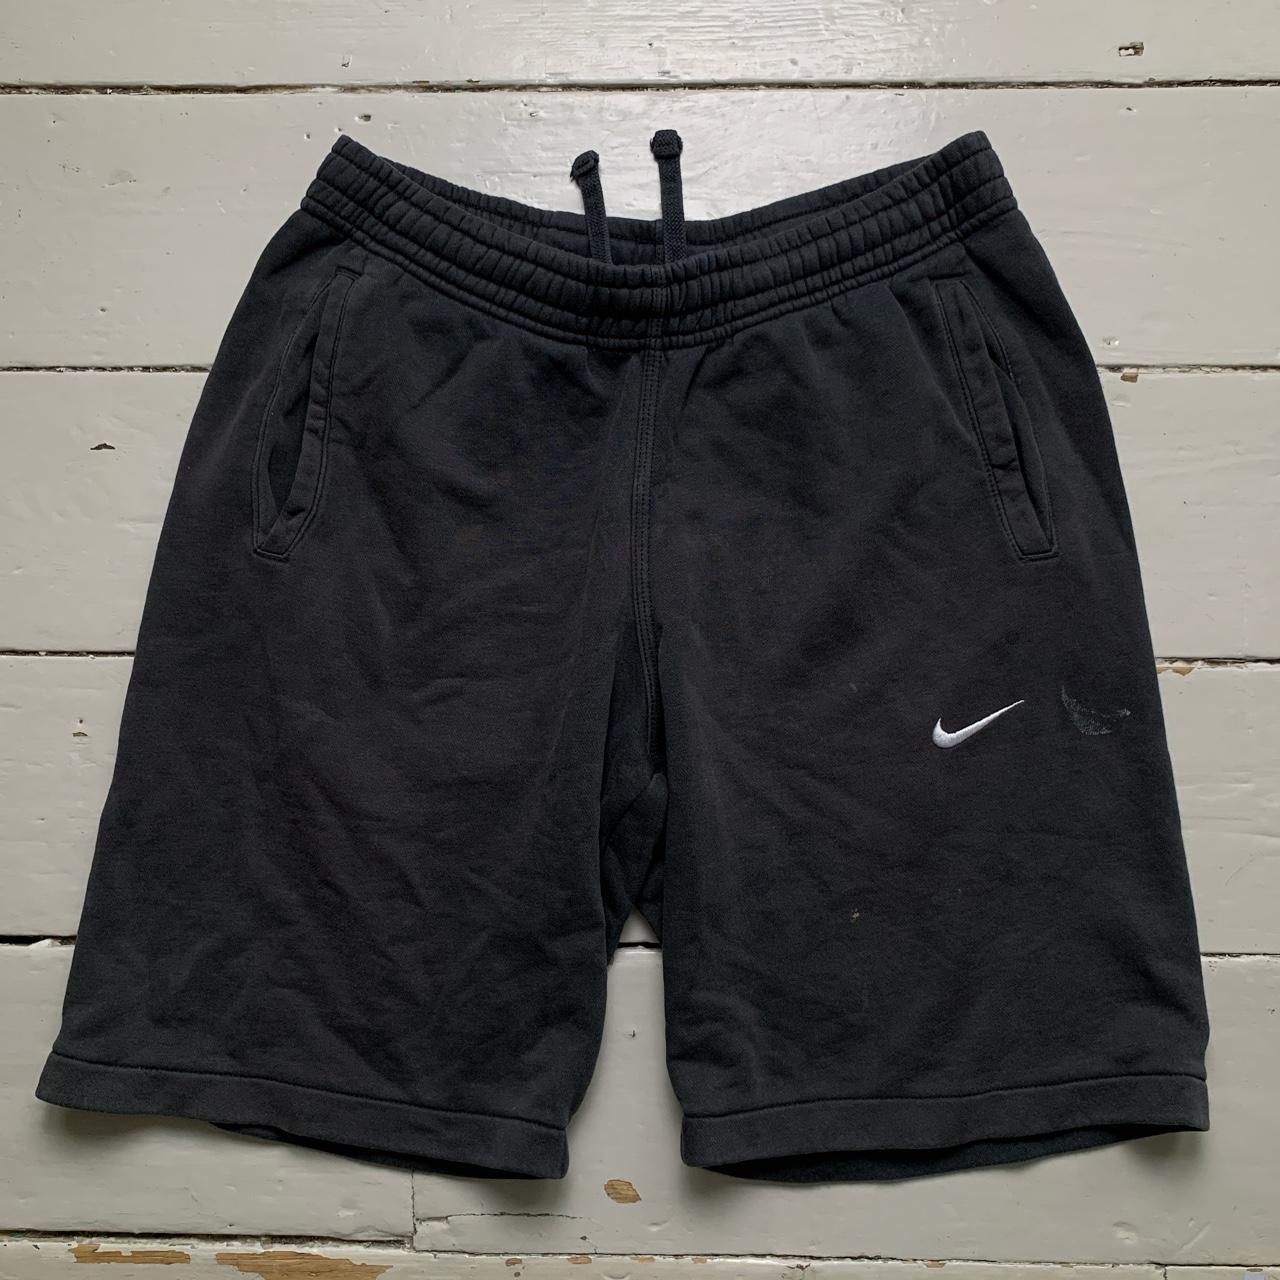 Nike Black and White Swoosh Cotton Shorts